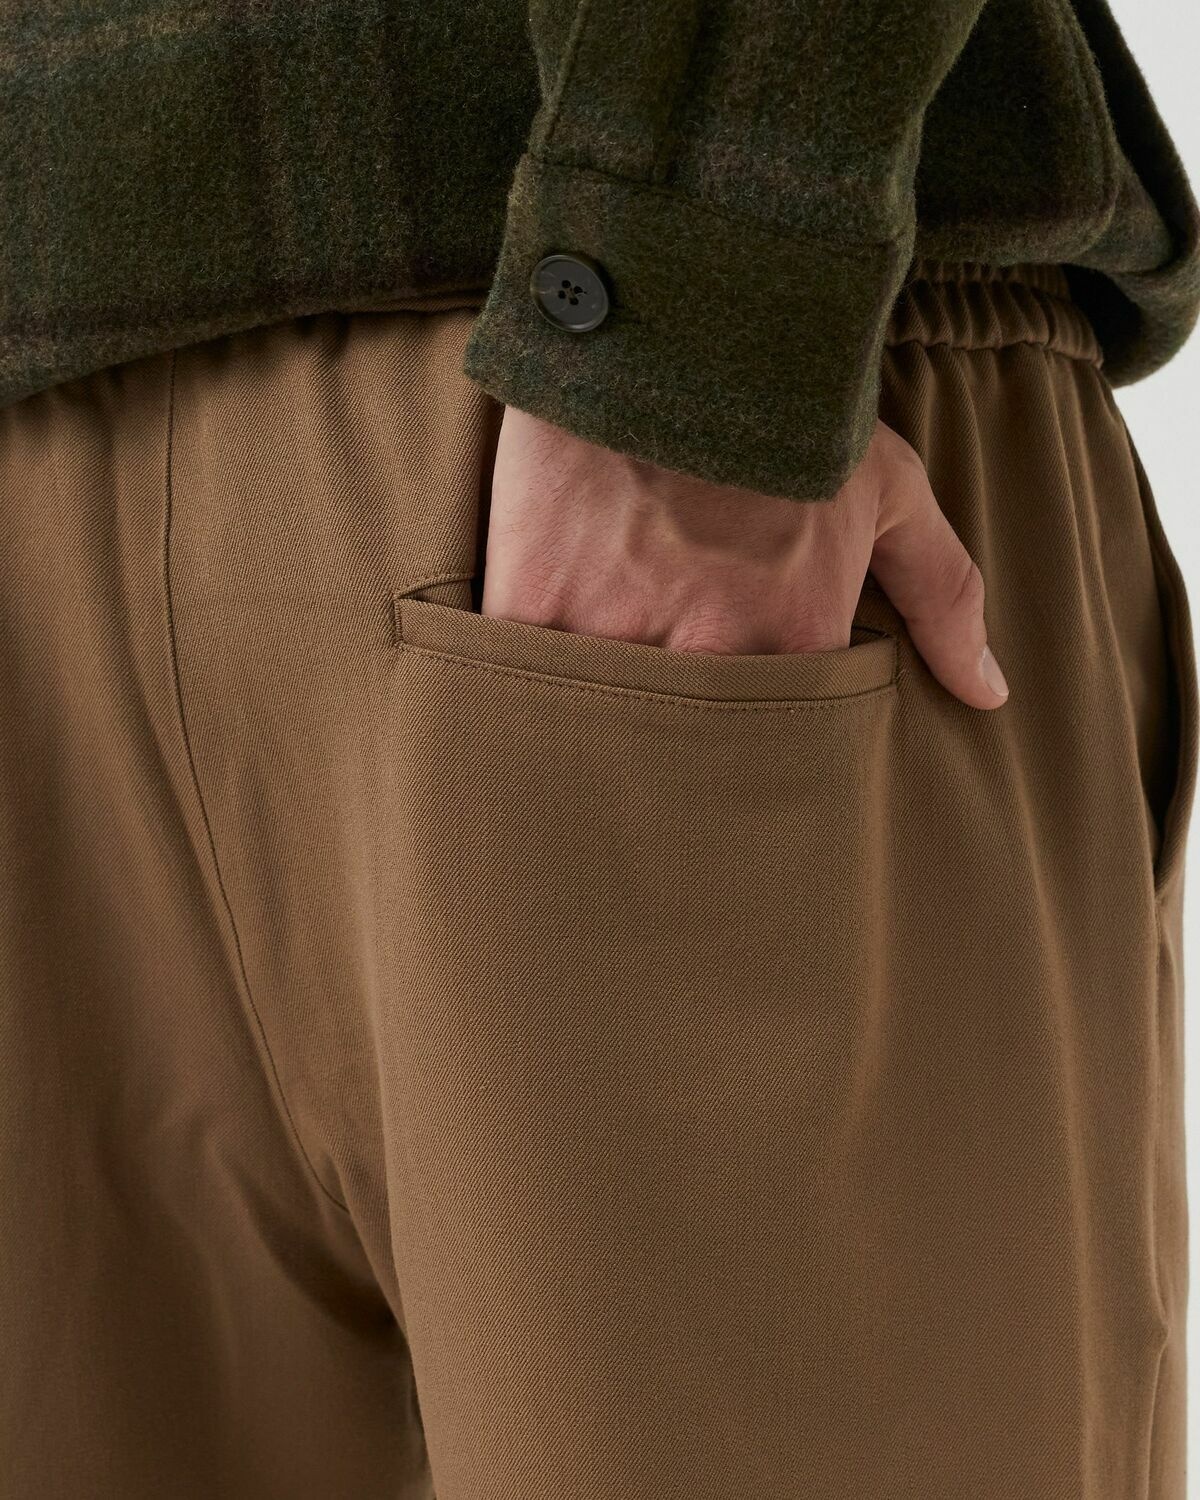 Les Deux PATRICK DRAWSTRING PANTS - Trousers - thyme green/green 